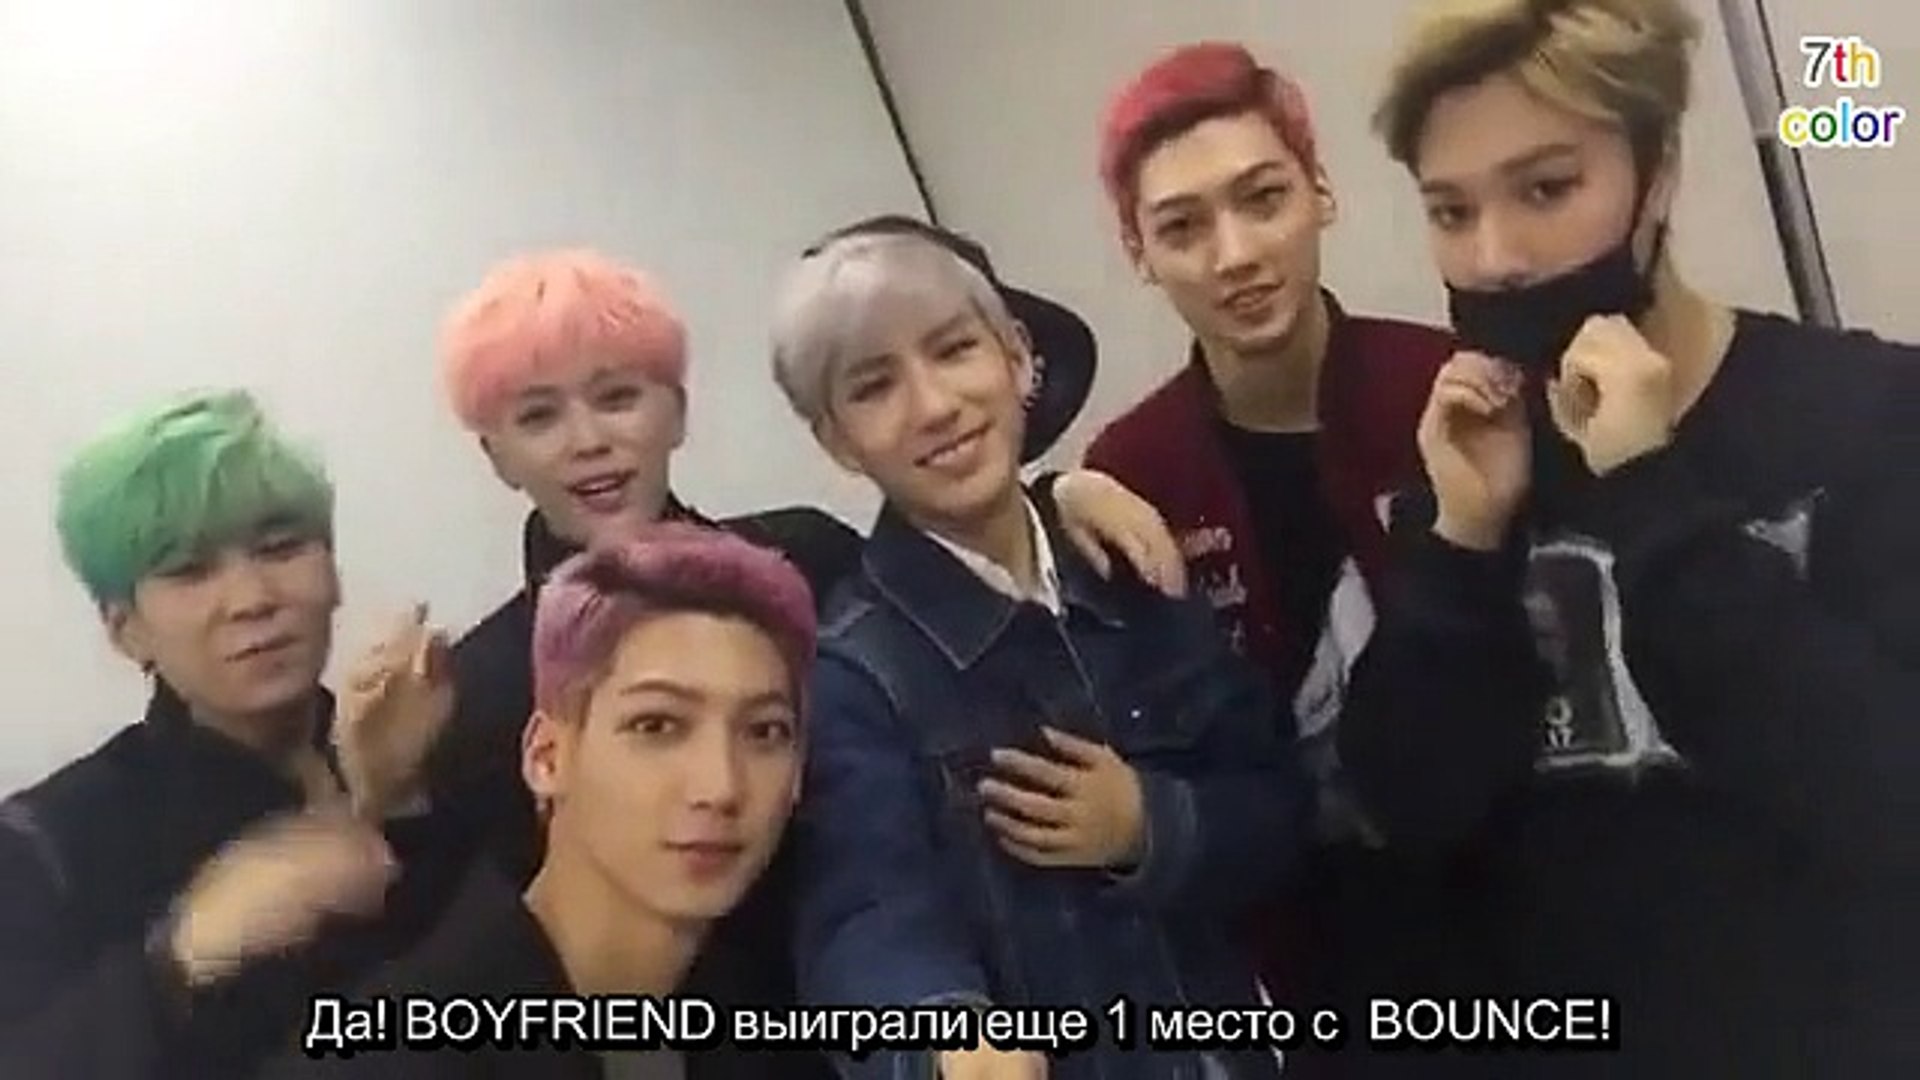 ⁣[RUS.SUB][24.03.2015] Благодарность Boyfriend фанатам за первое место на The Show c Bounce